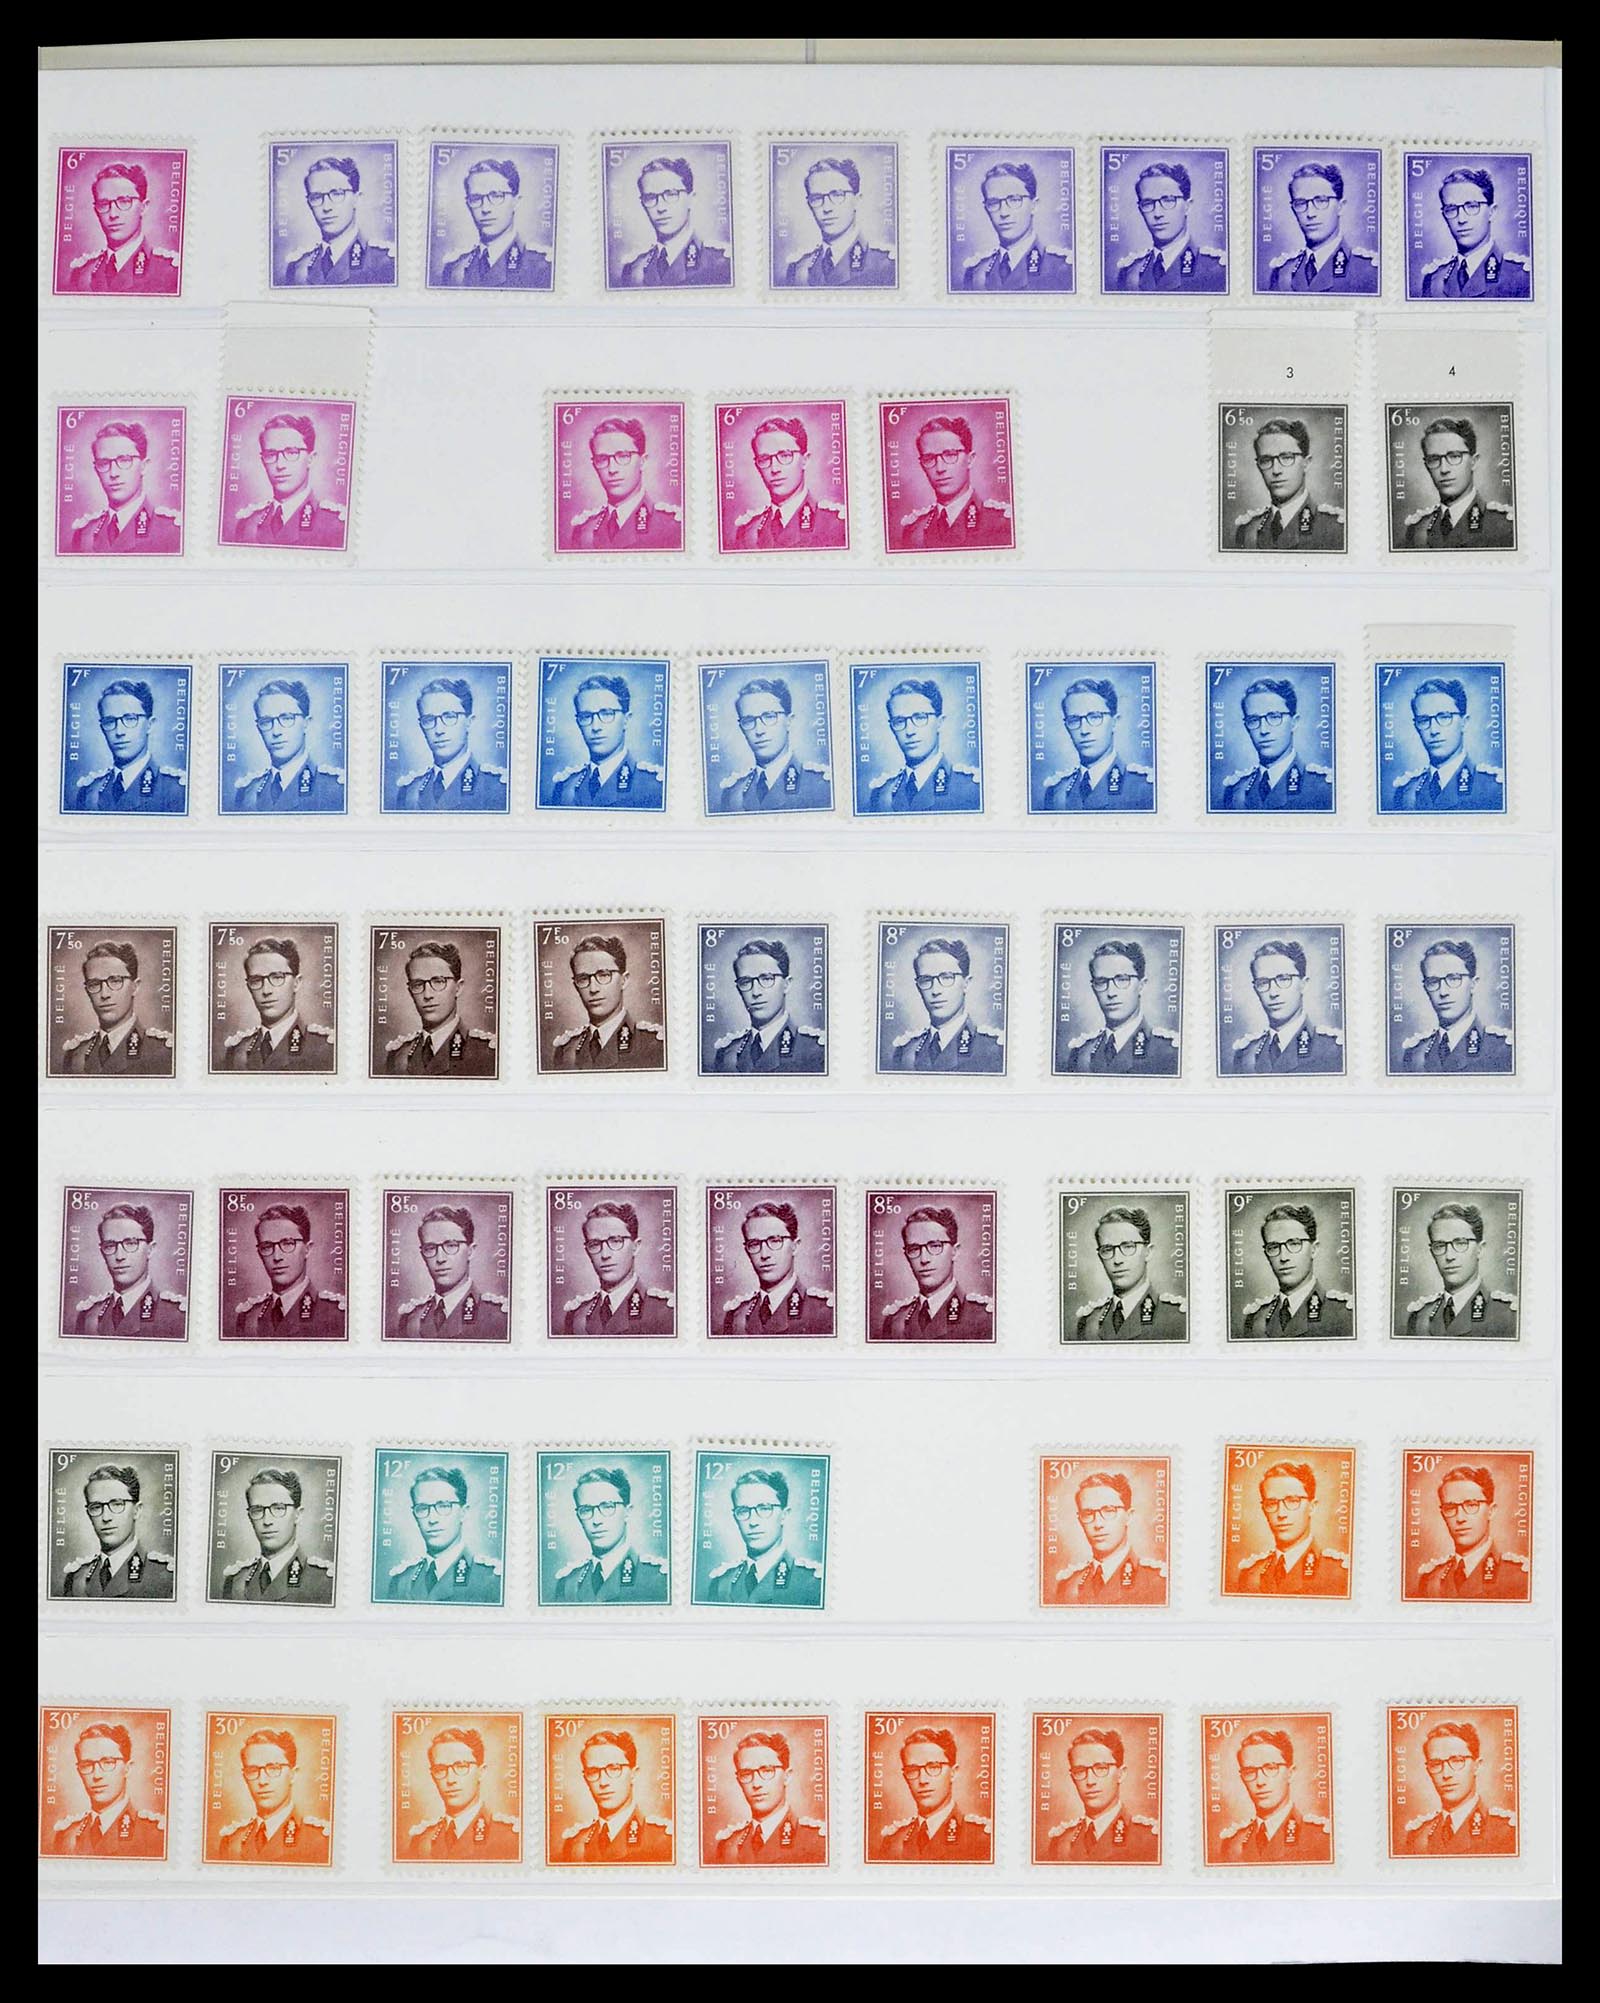 39229 0004 - Stamp collection 39229 Belgium Boudewijn with glasses 1952-1975.